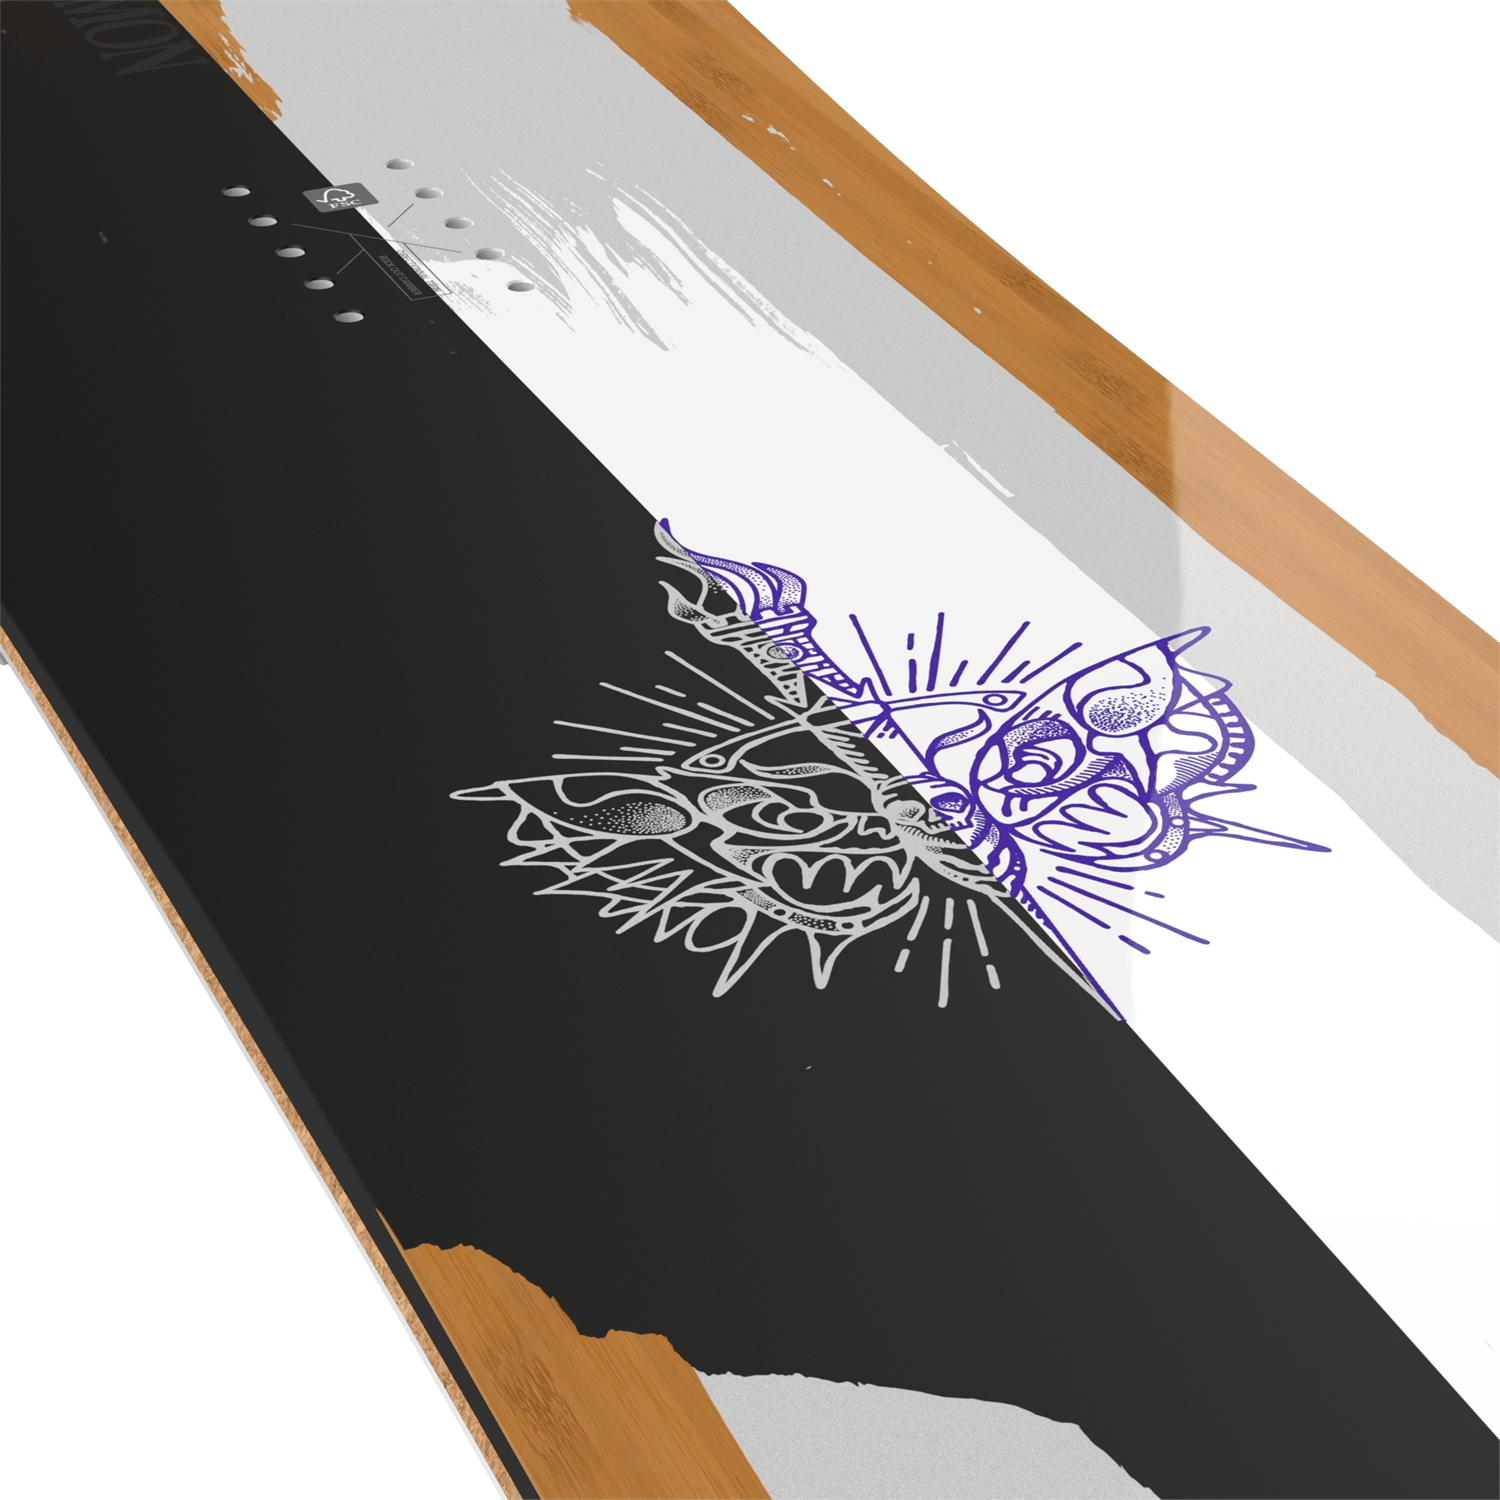 Salomon Assassin Snowboard · 2023 · 158W cm